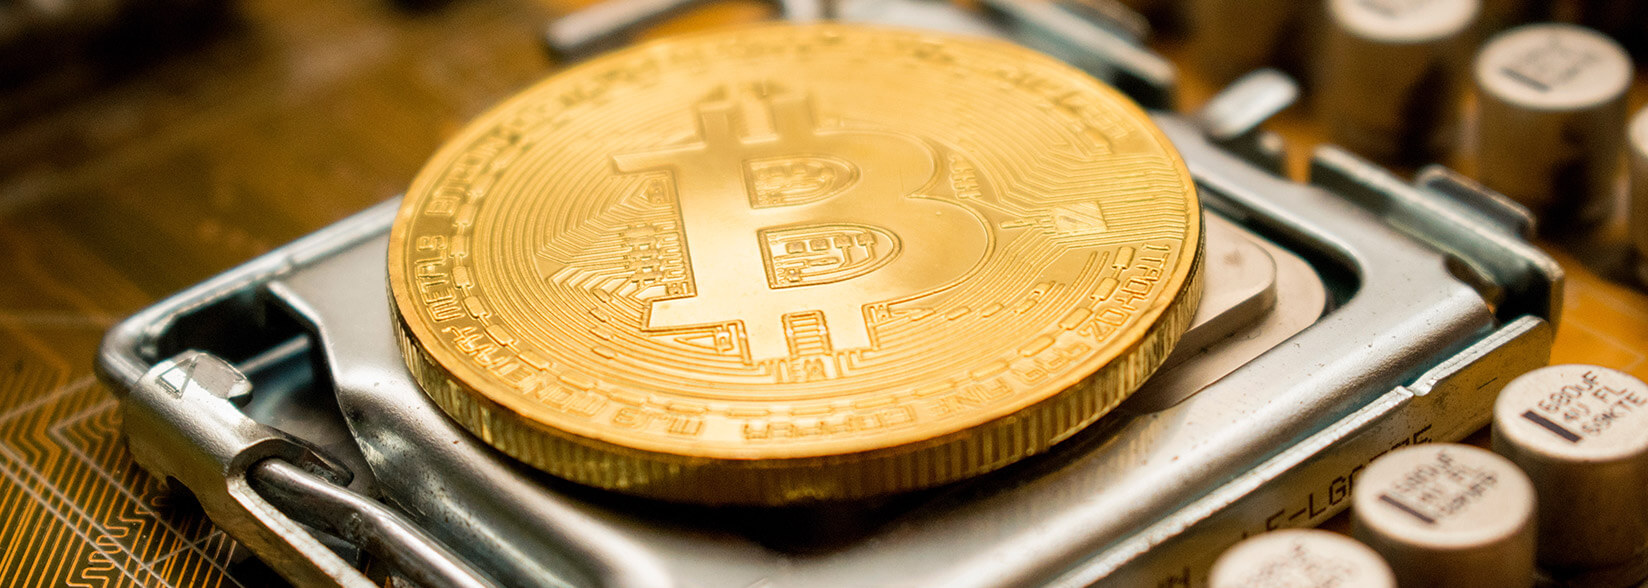 acțiuni miniere bitcoin